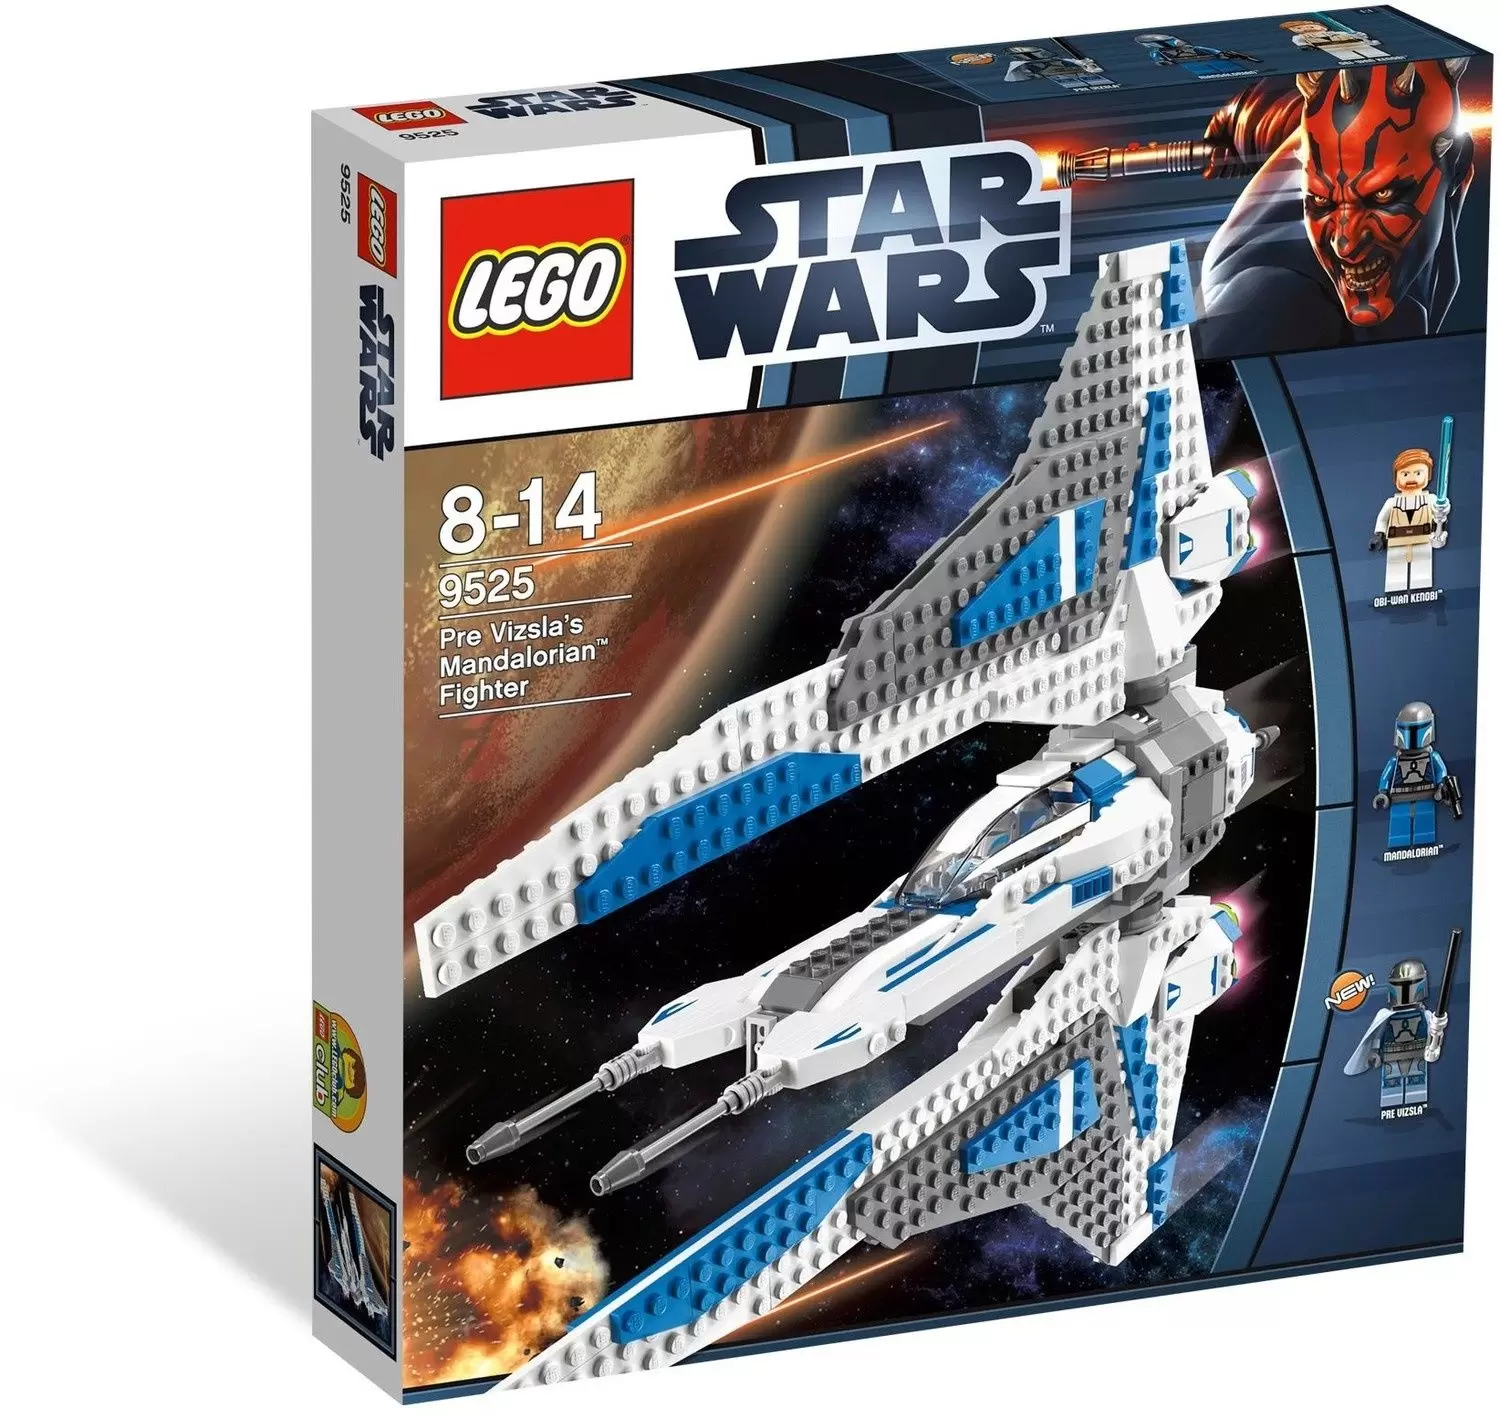 LEGO Star Wars - Pre Vizsla\'s Mandalorian Fighter